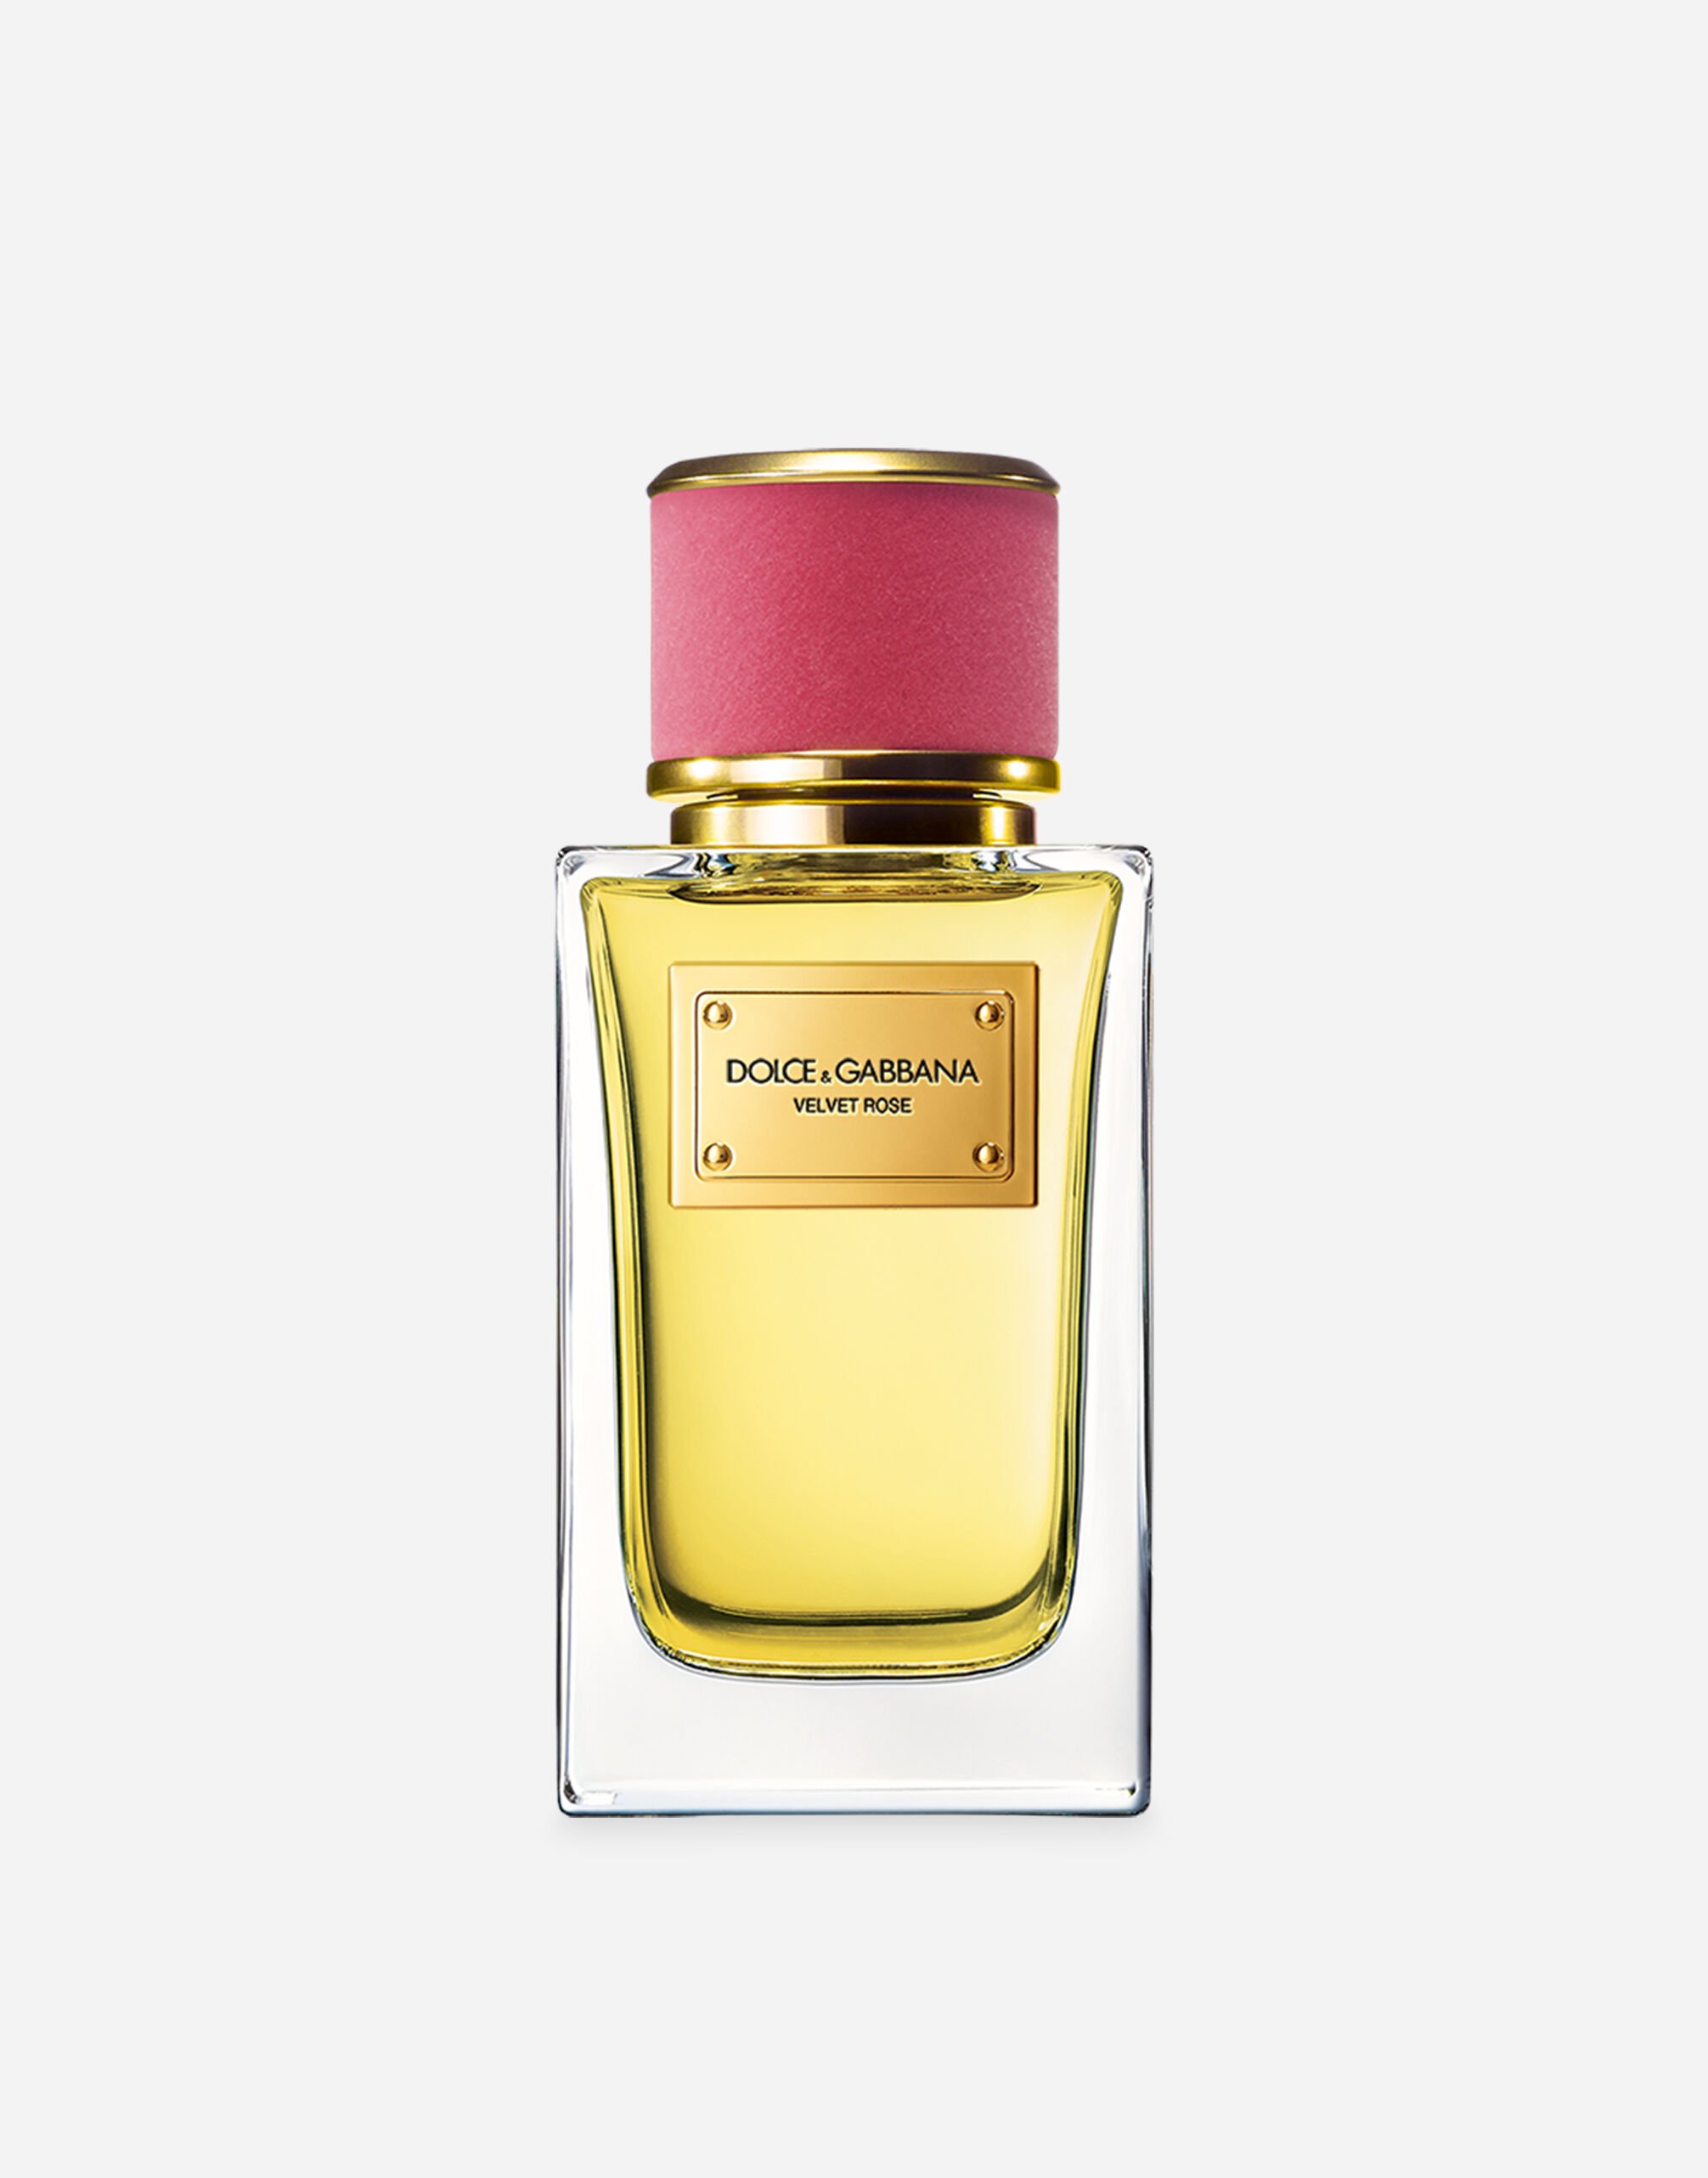 Dolce & Gabbana Velvet Rose Eau de Parfum - VP6974VP243